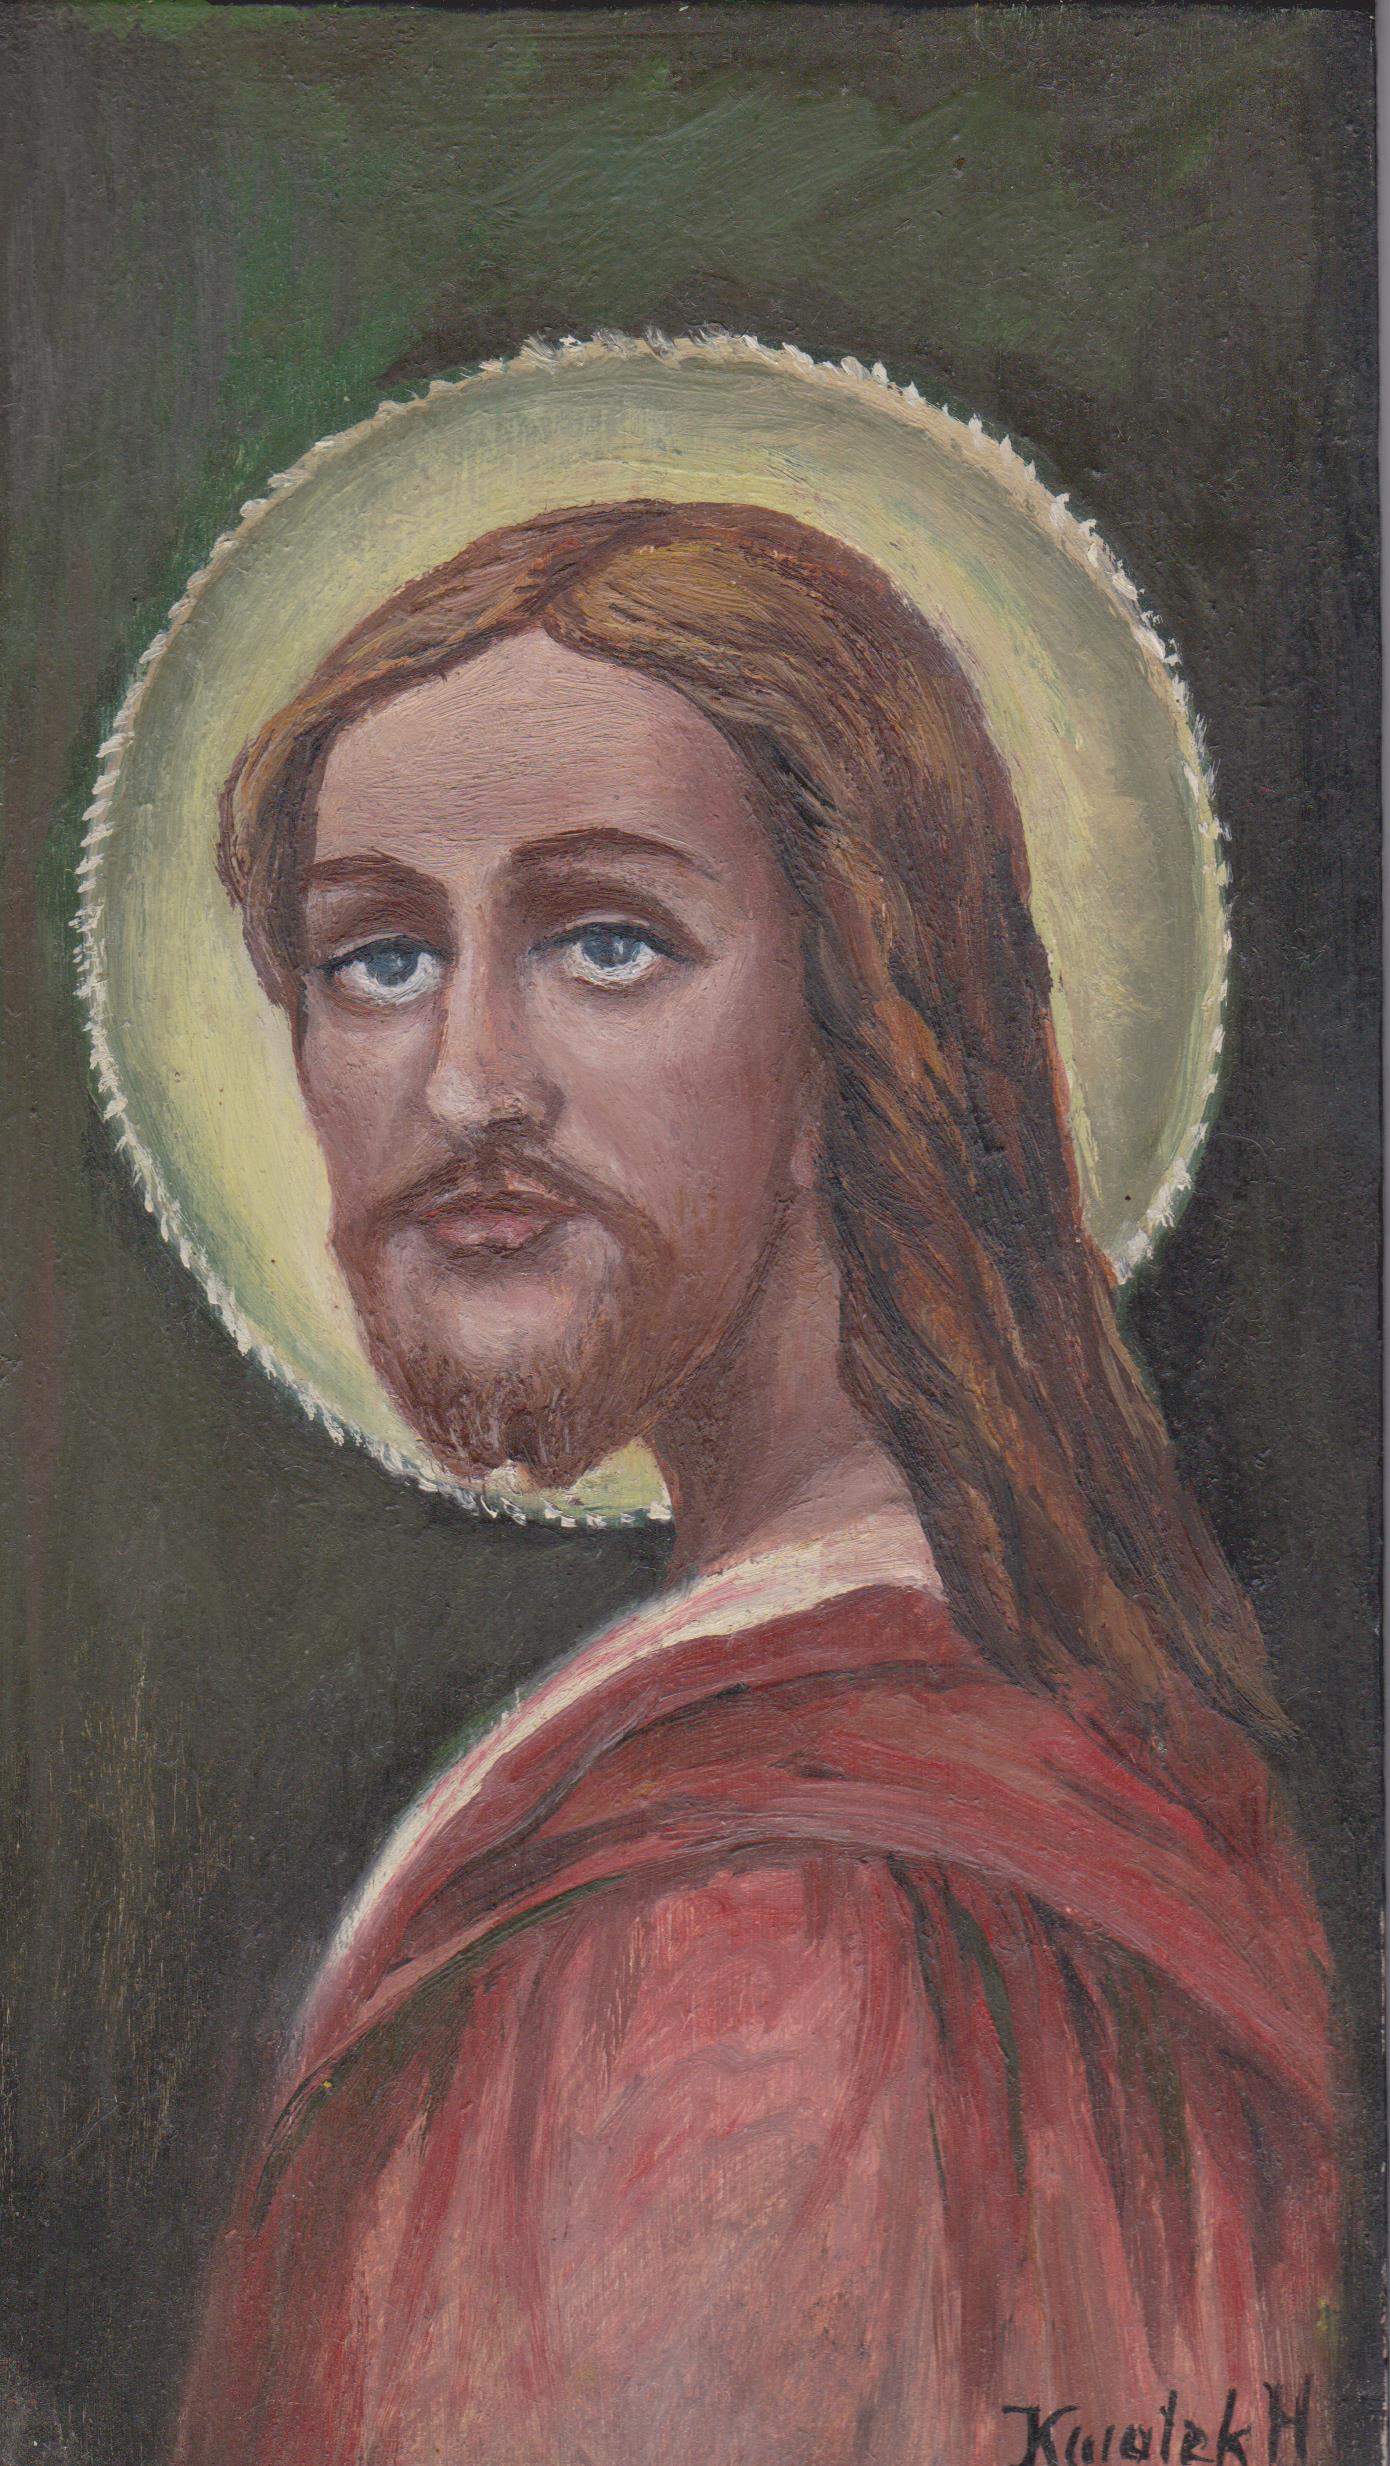 Jezus namalowany na desce